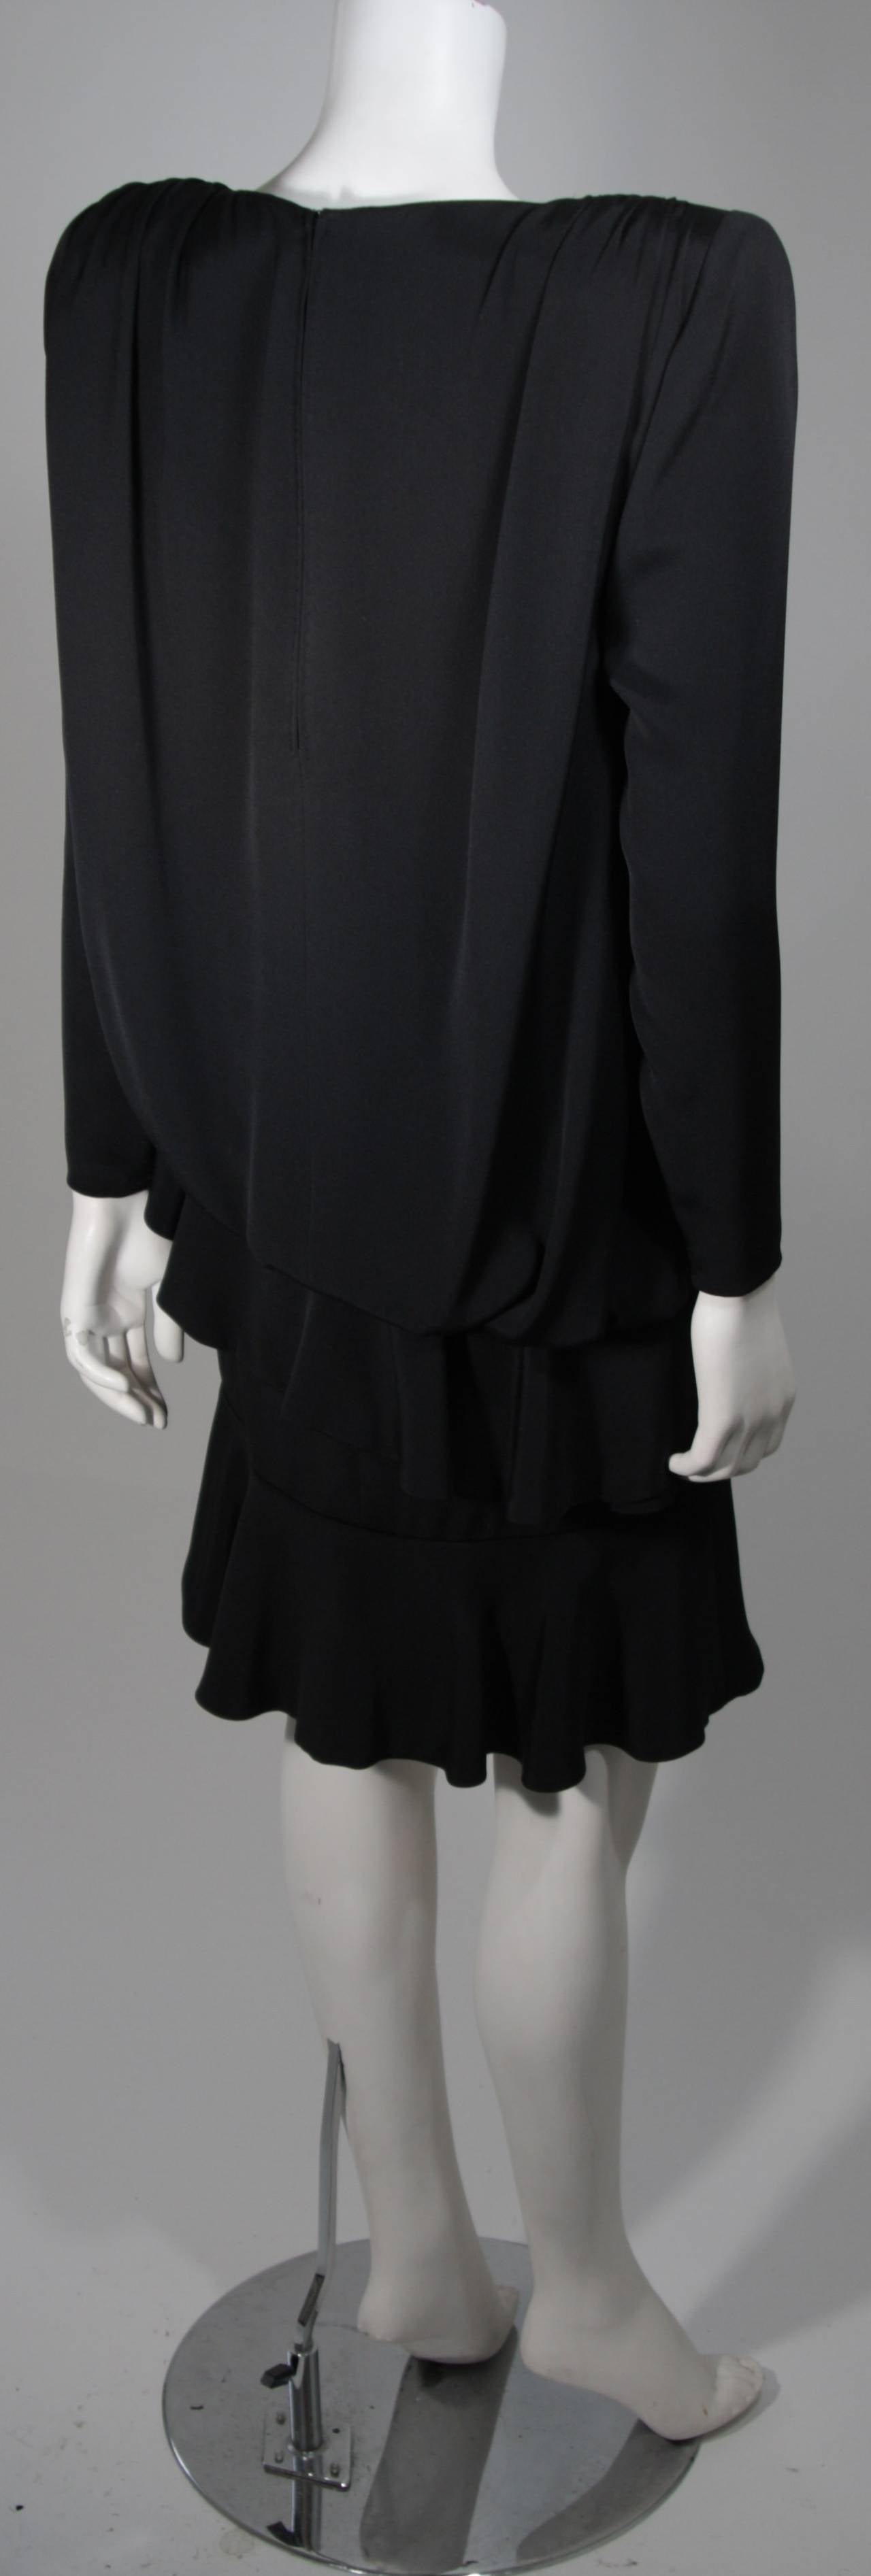 Galanos Silk Structured Shoulder Cocktail Dress Size 2 4 3